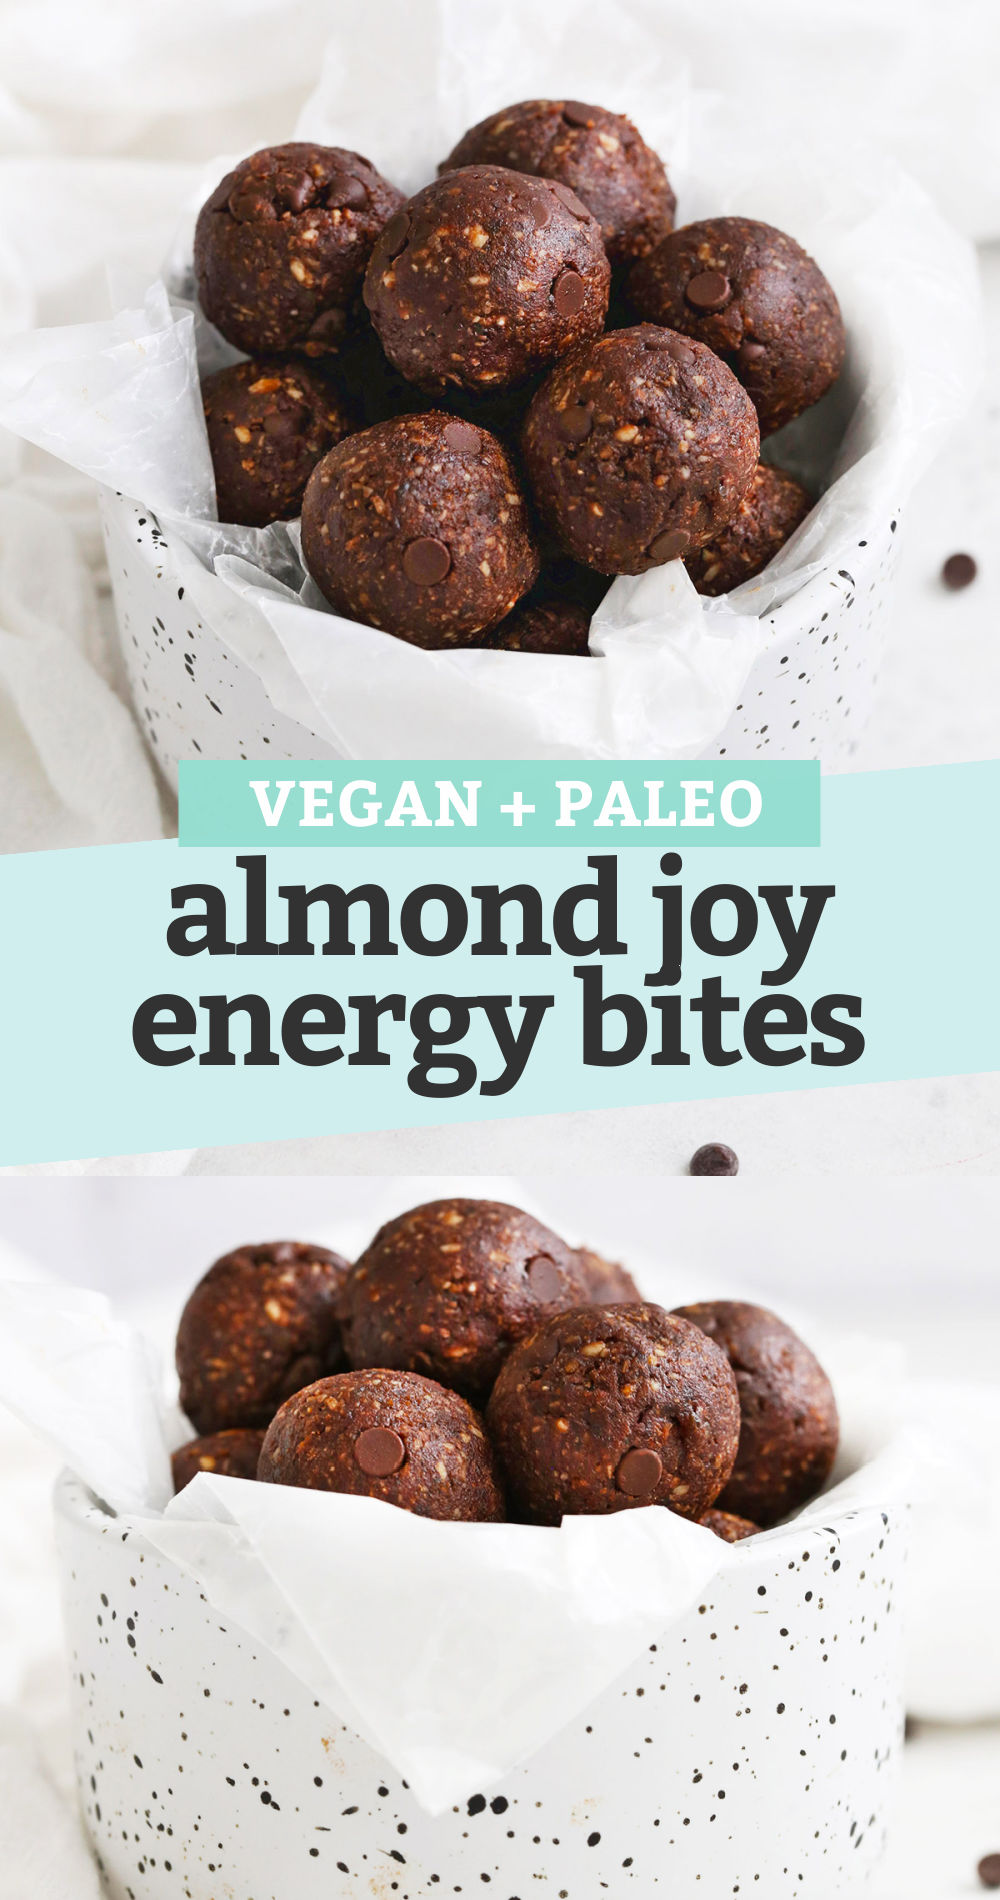 Collage of images of almond joy energy bites with text overlay that reads "vegan + paleo almond joy energy bites"